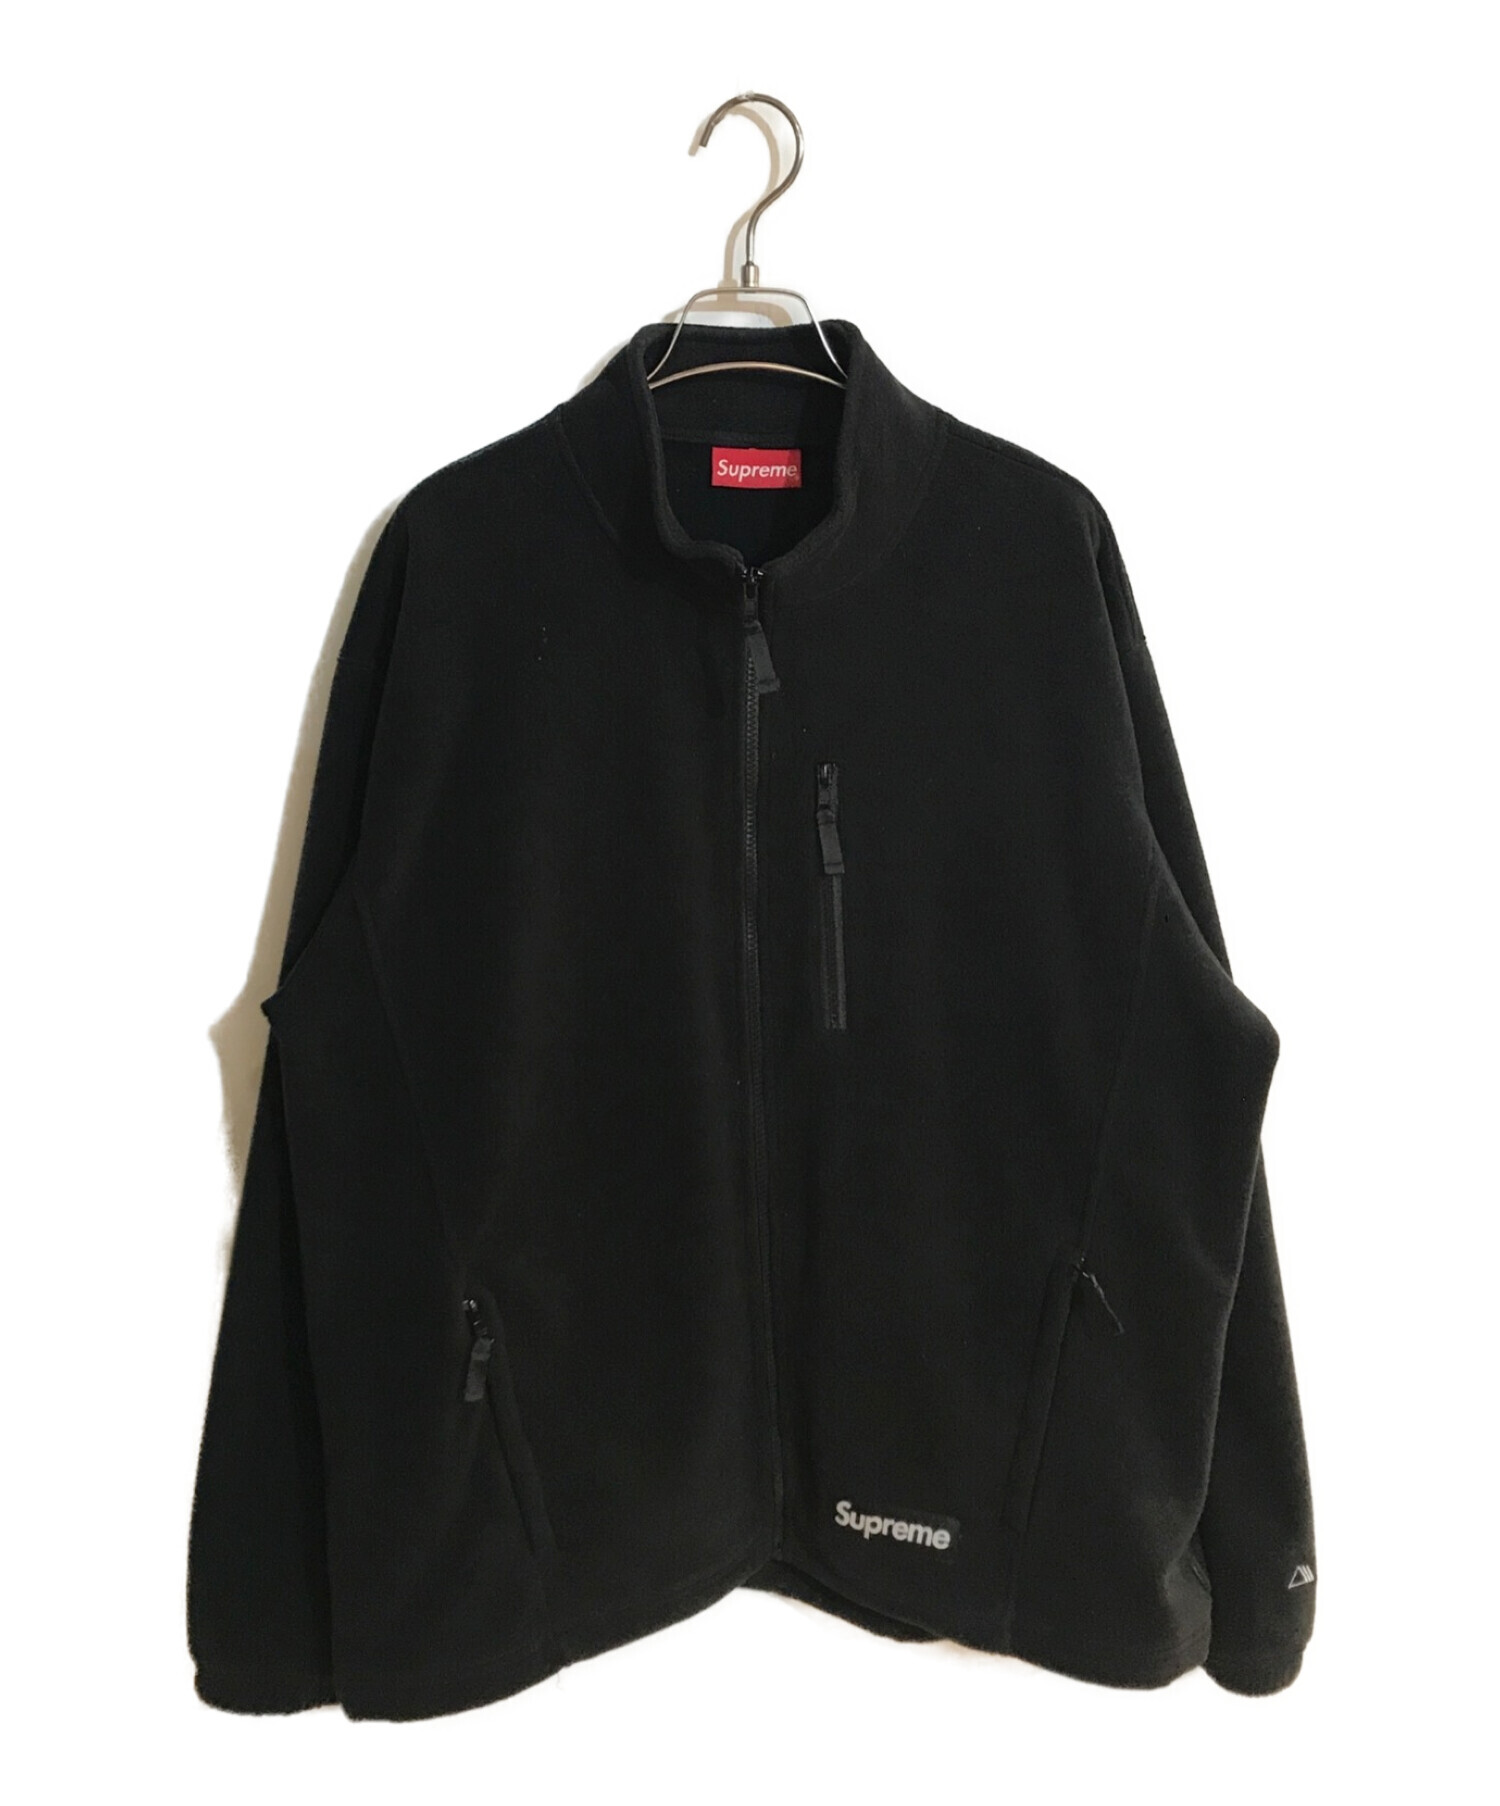 Supreme (シュプリーム) polartec zip jacket/ポーラテックジップジャケット ブラック サイズ:SIZE L